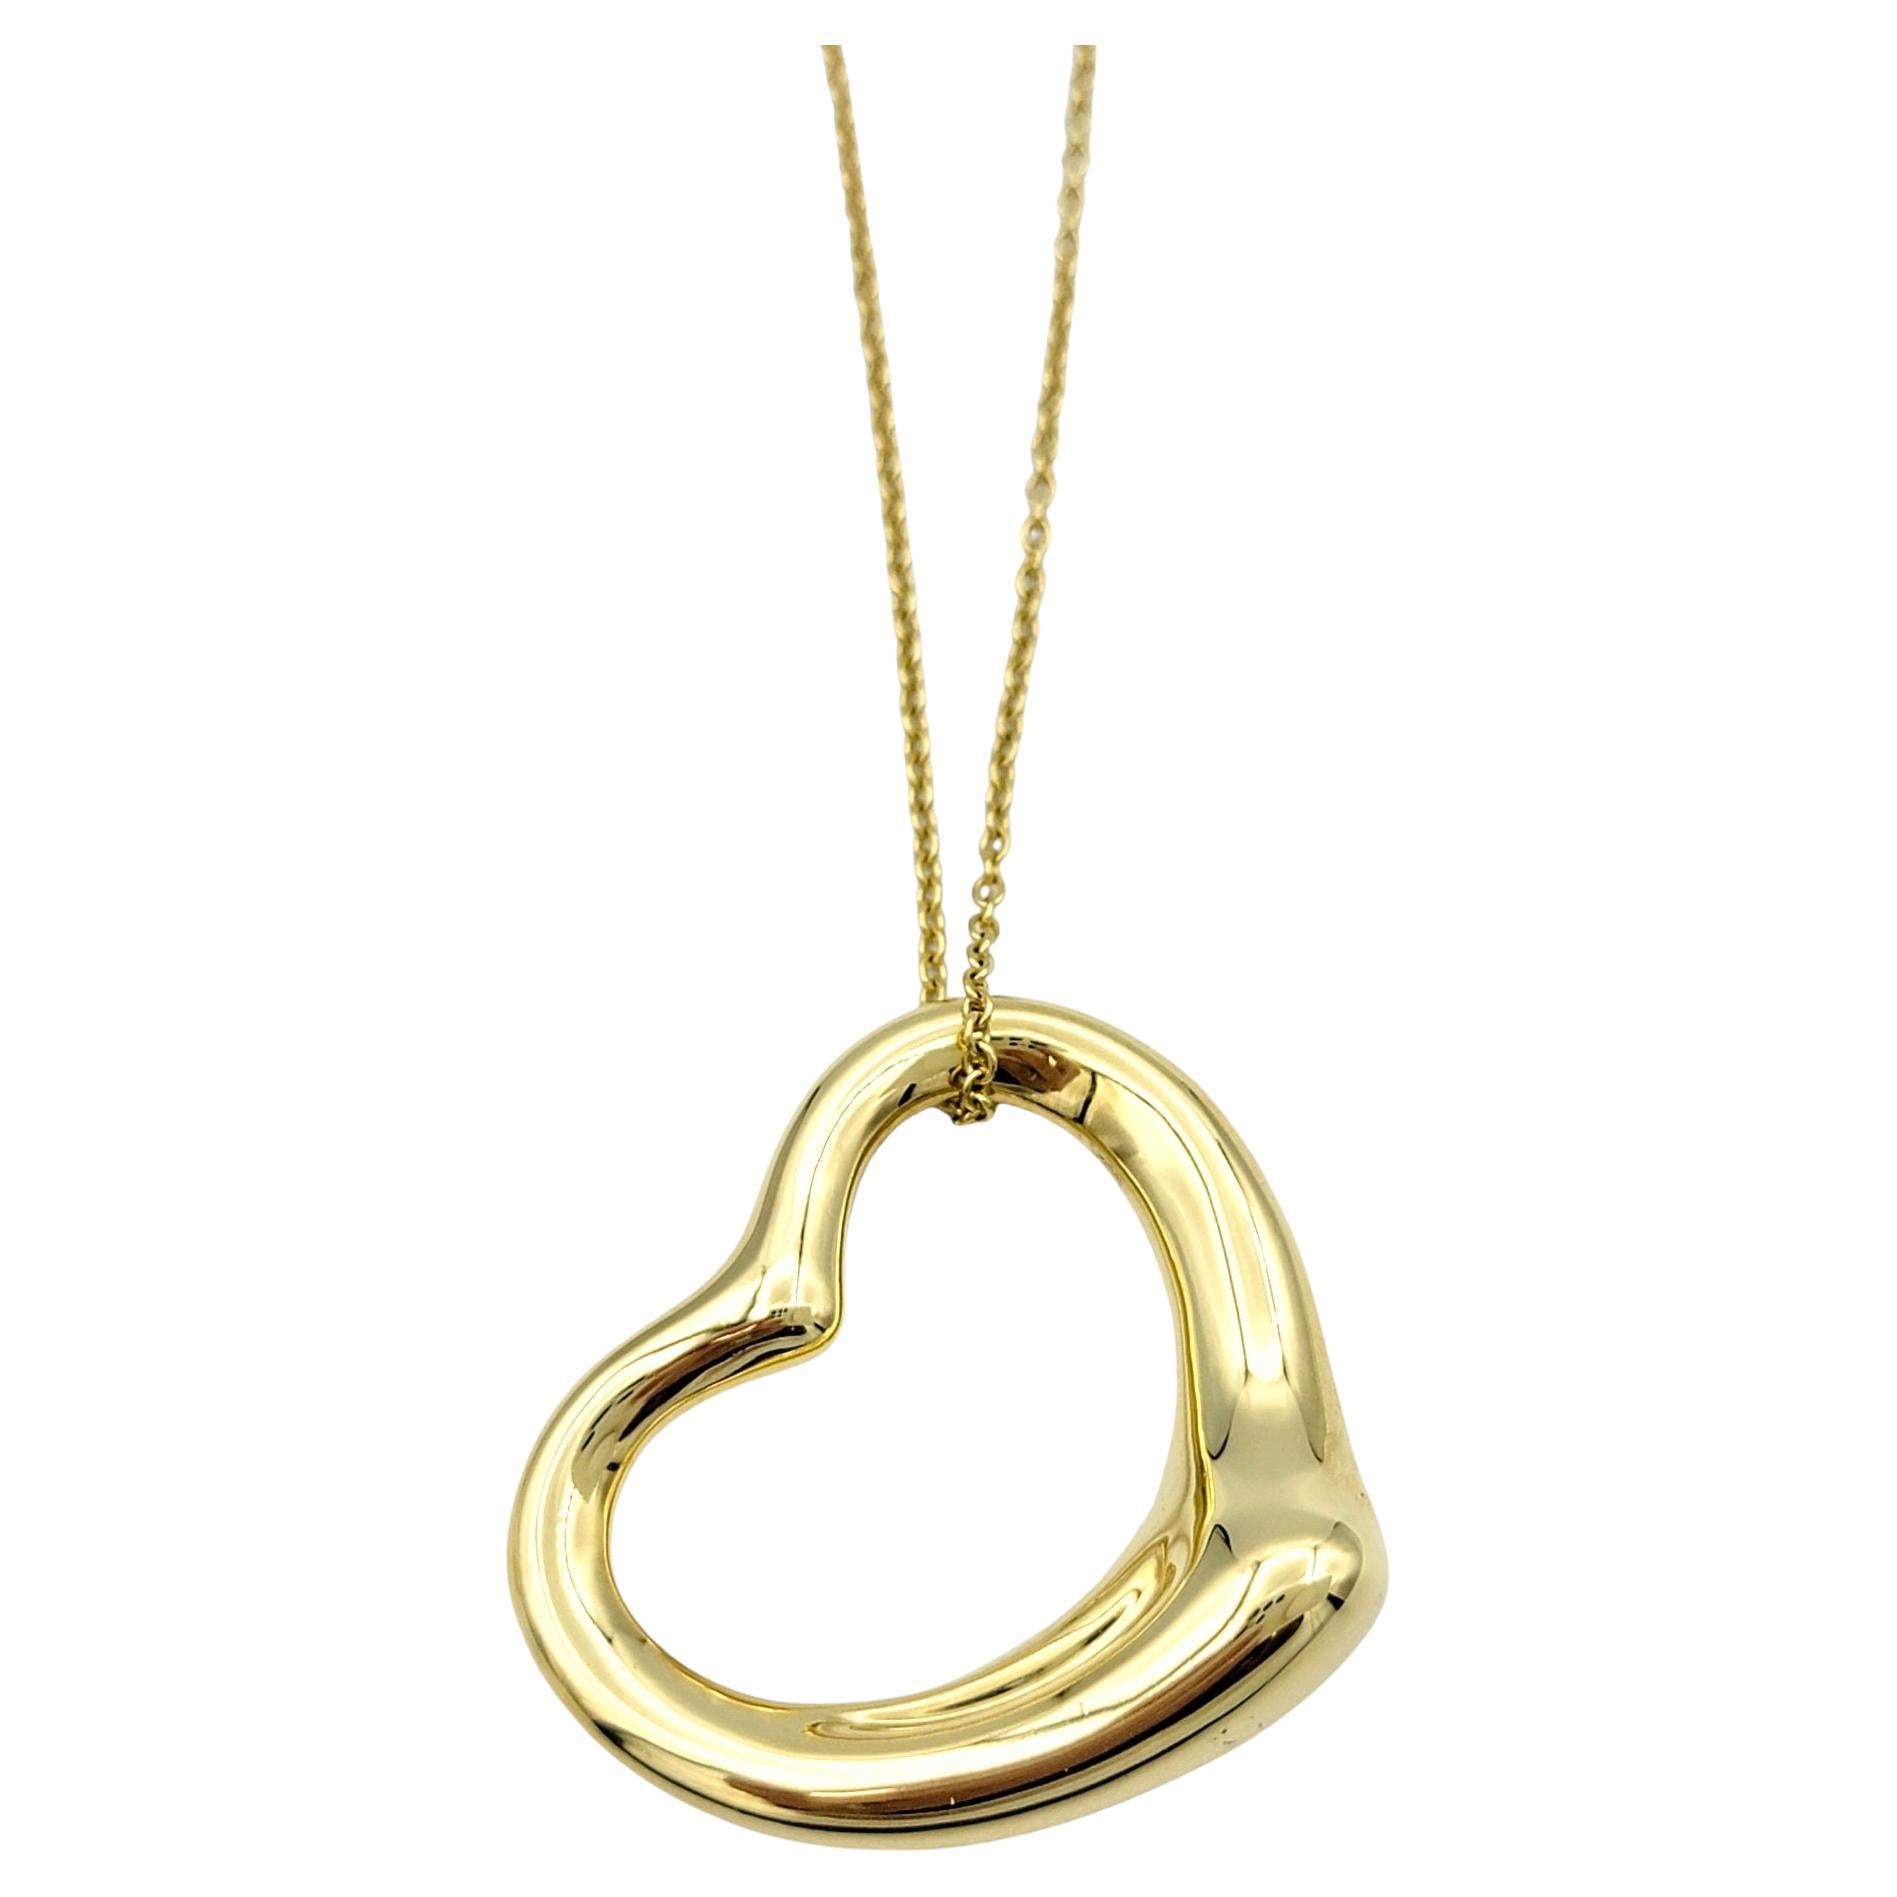 Tiffany & Co. Elsa Peretti Open Heart Pendant Necklace in 18 Karat Yellow Gold